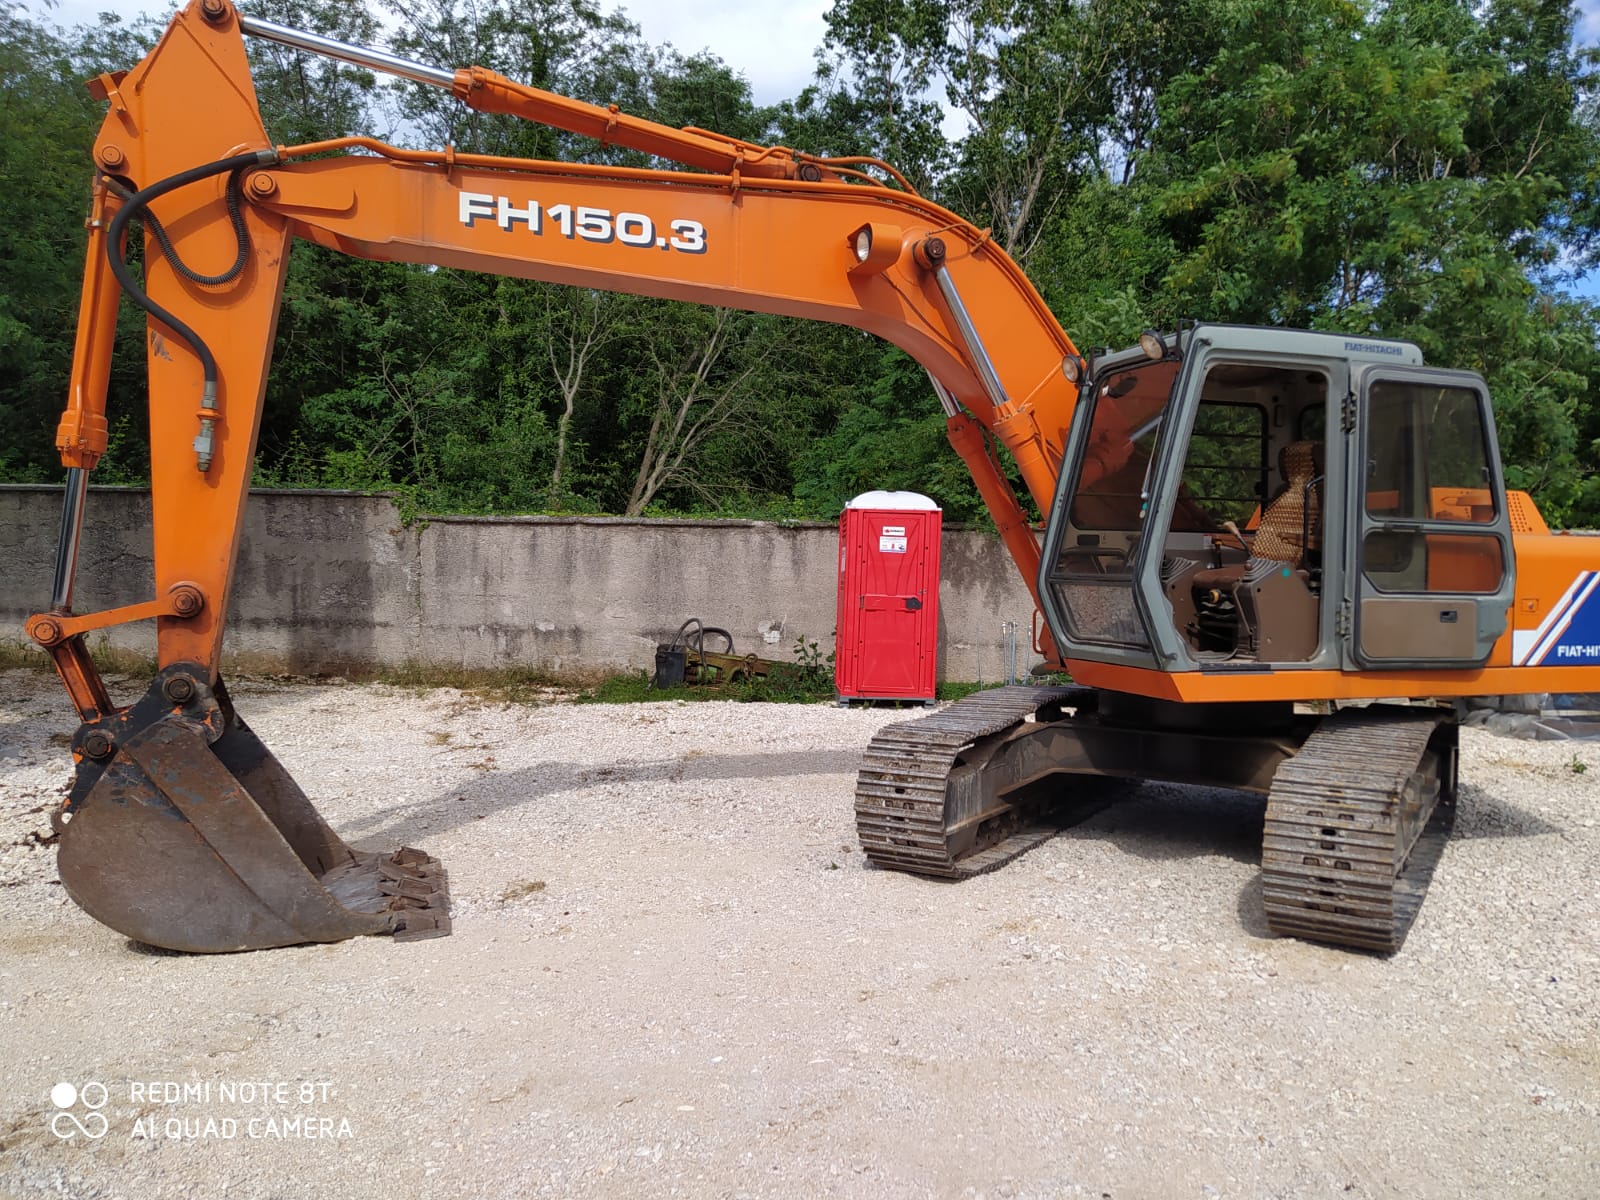 Escavatore FH150.3 Fiat Hitachi in vendita - foto 1